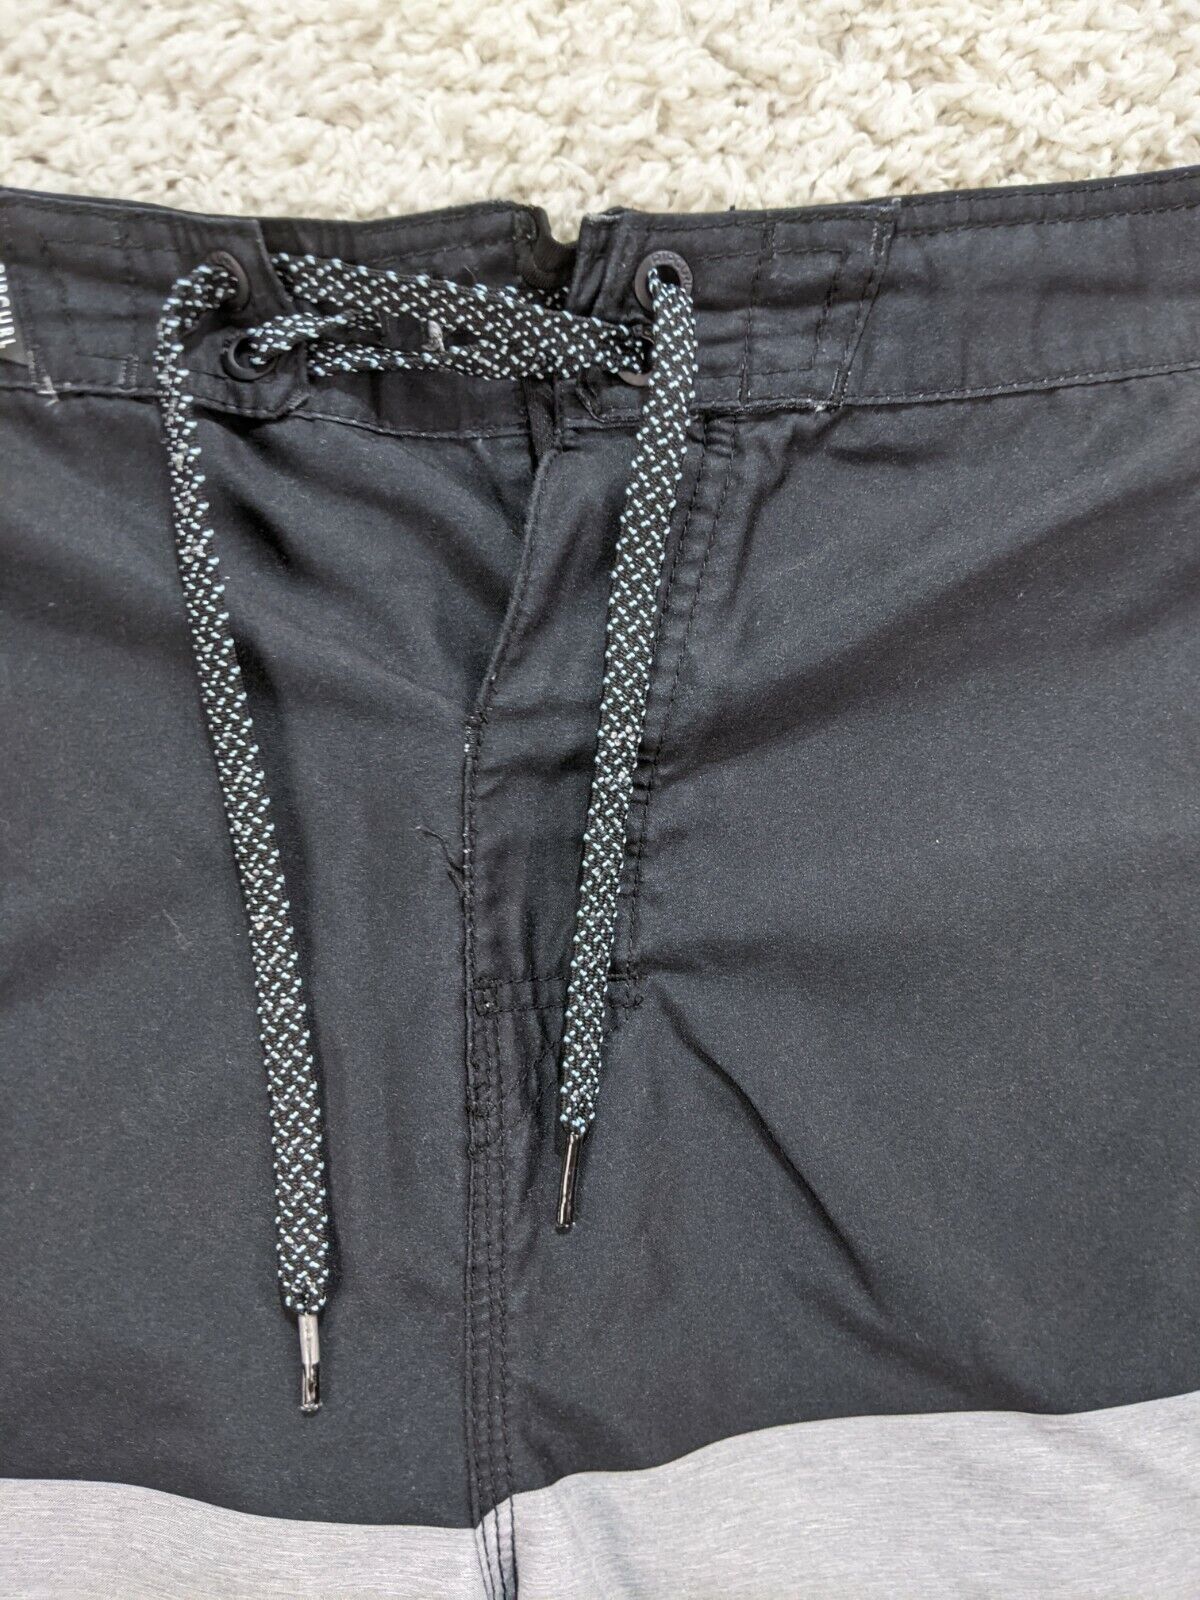 Rip Curl Men's Board Shorts 38 Black Gray Side Pocket Swimsuit 2006